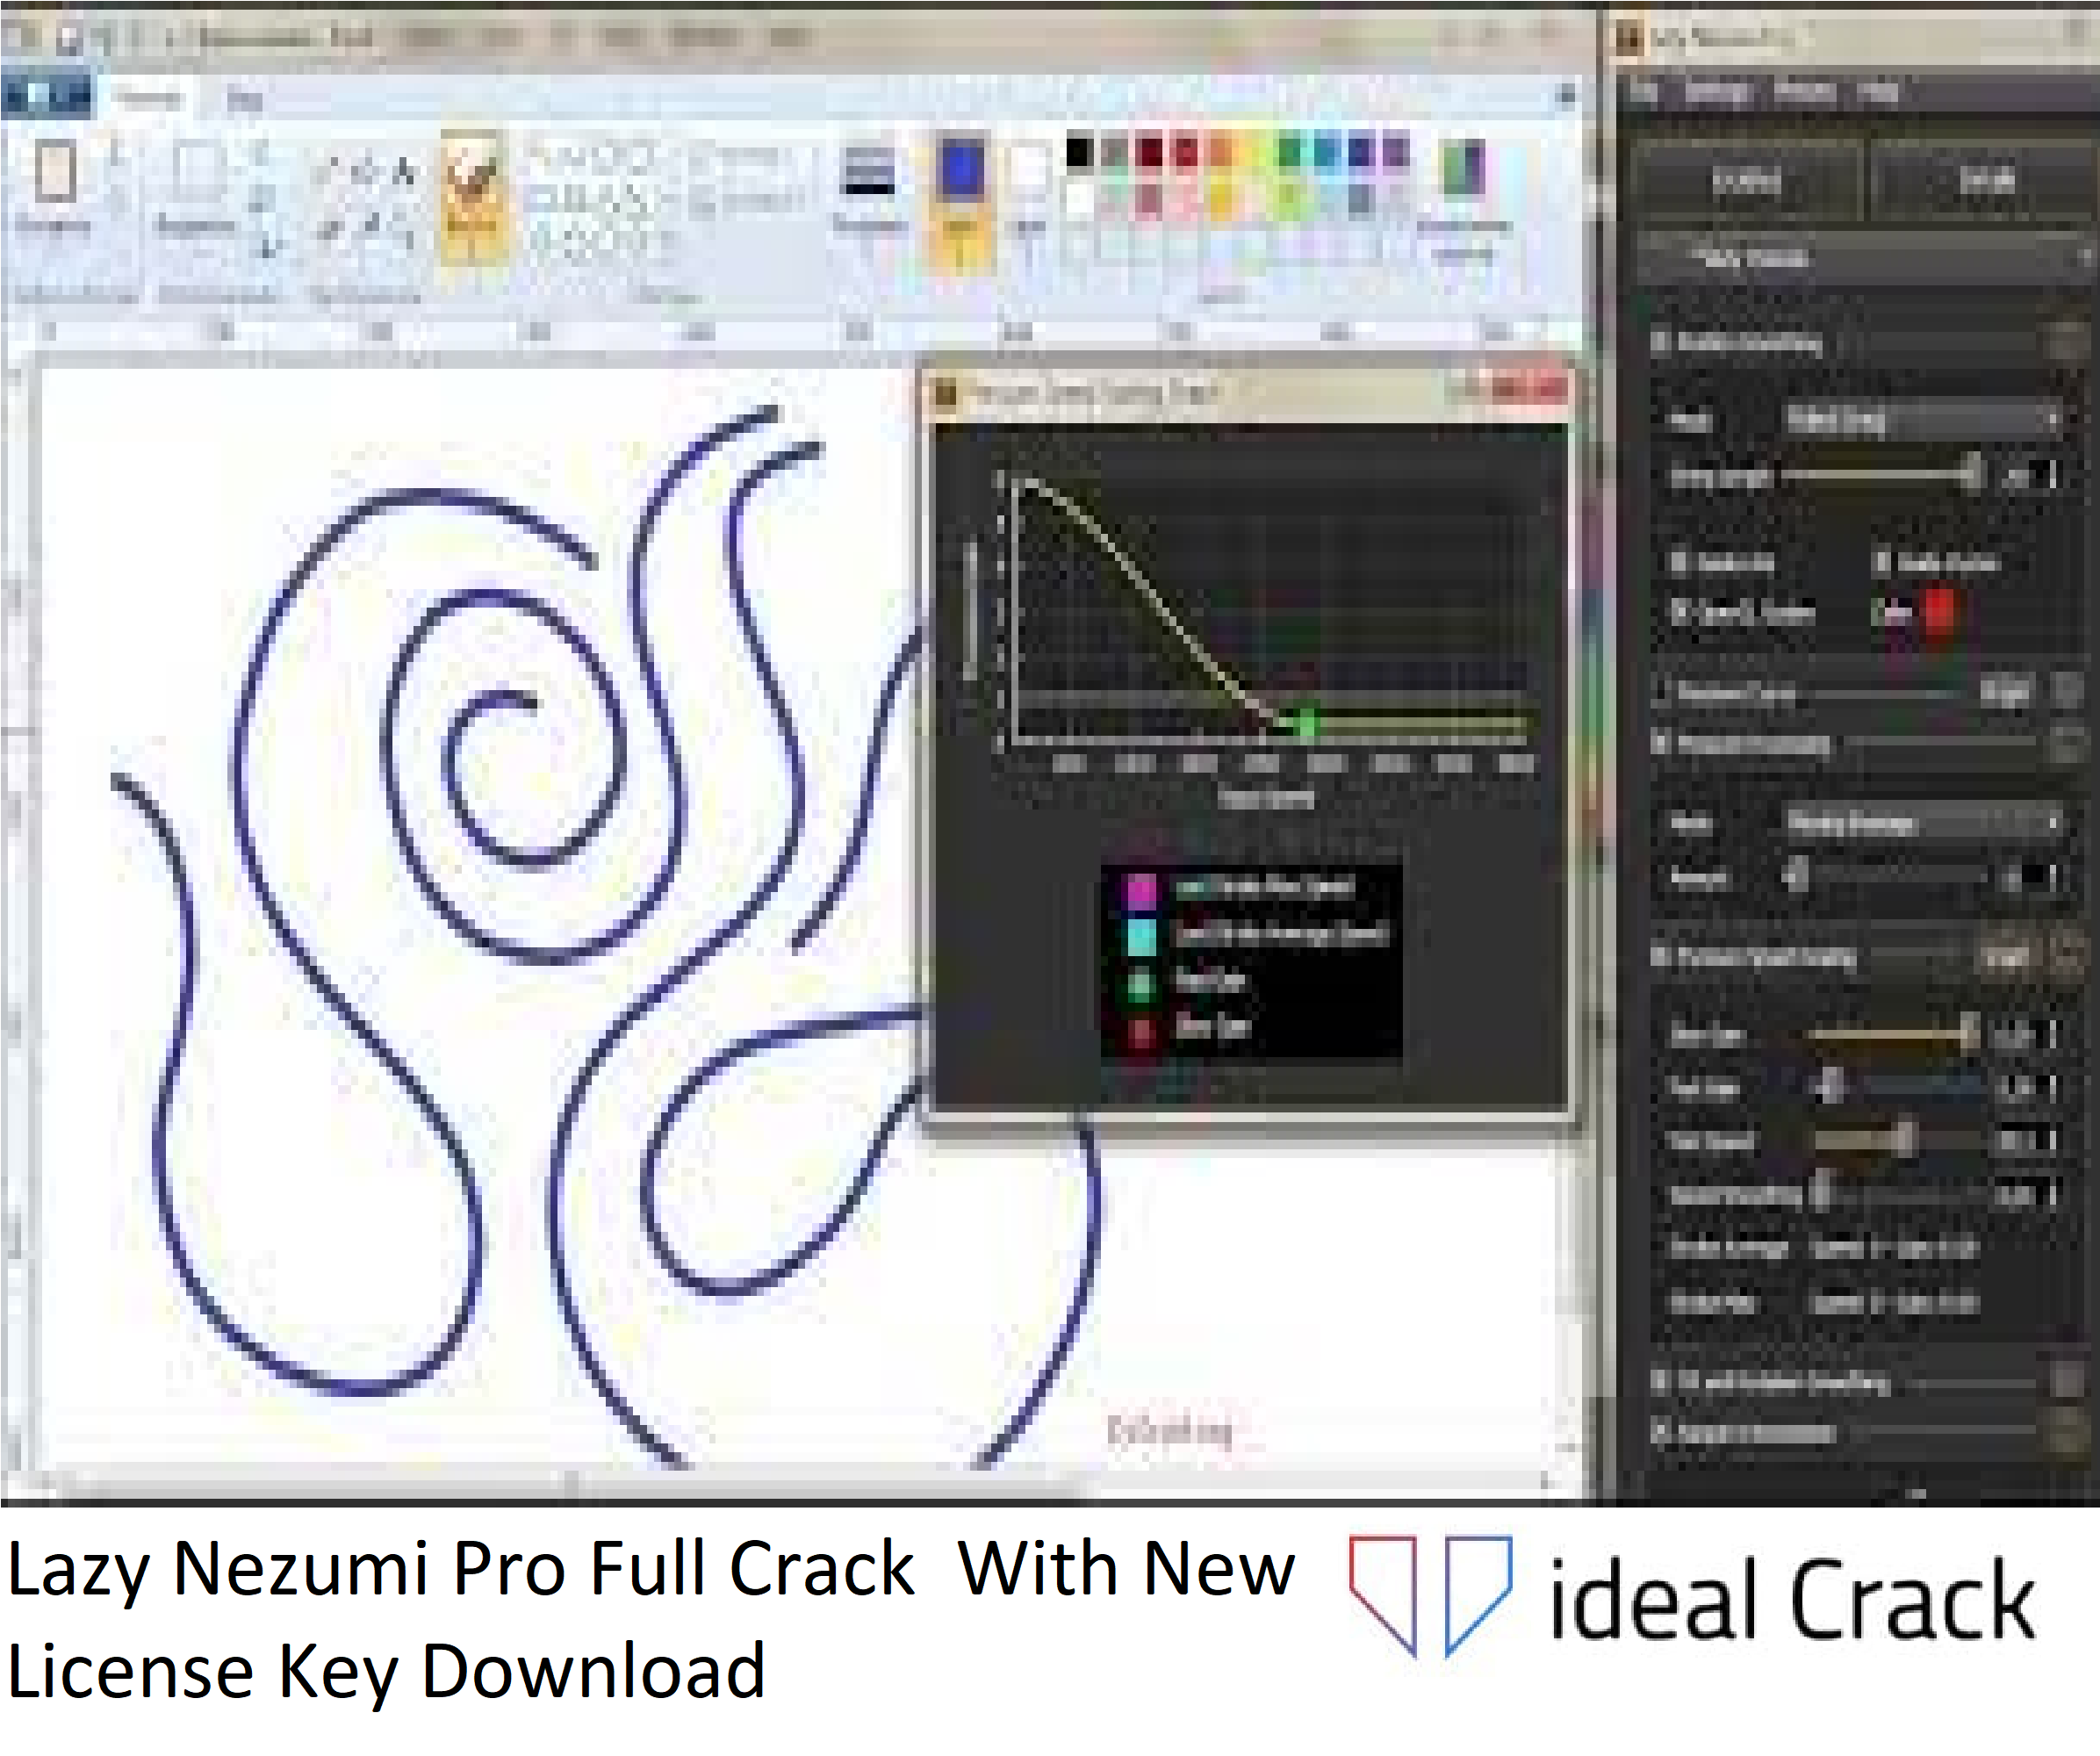 Lazy Nezumi Pro Full Crack With New License Key Download